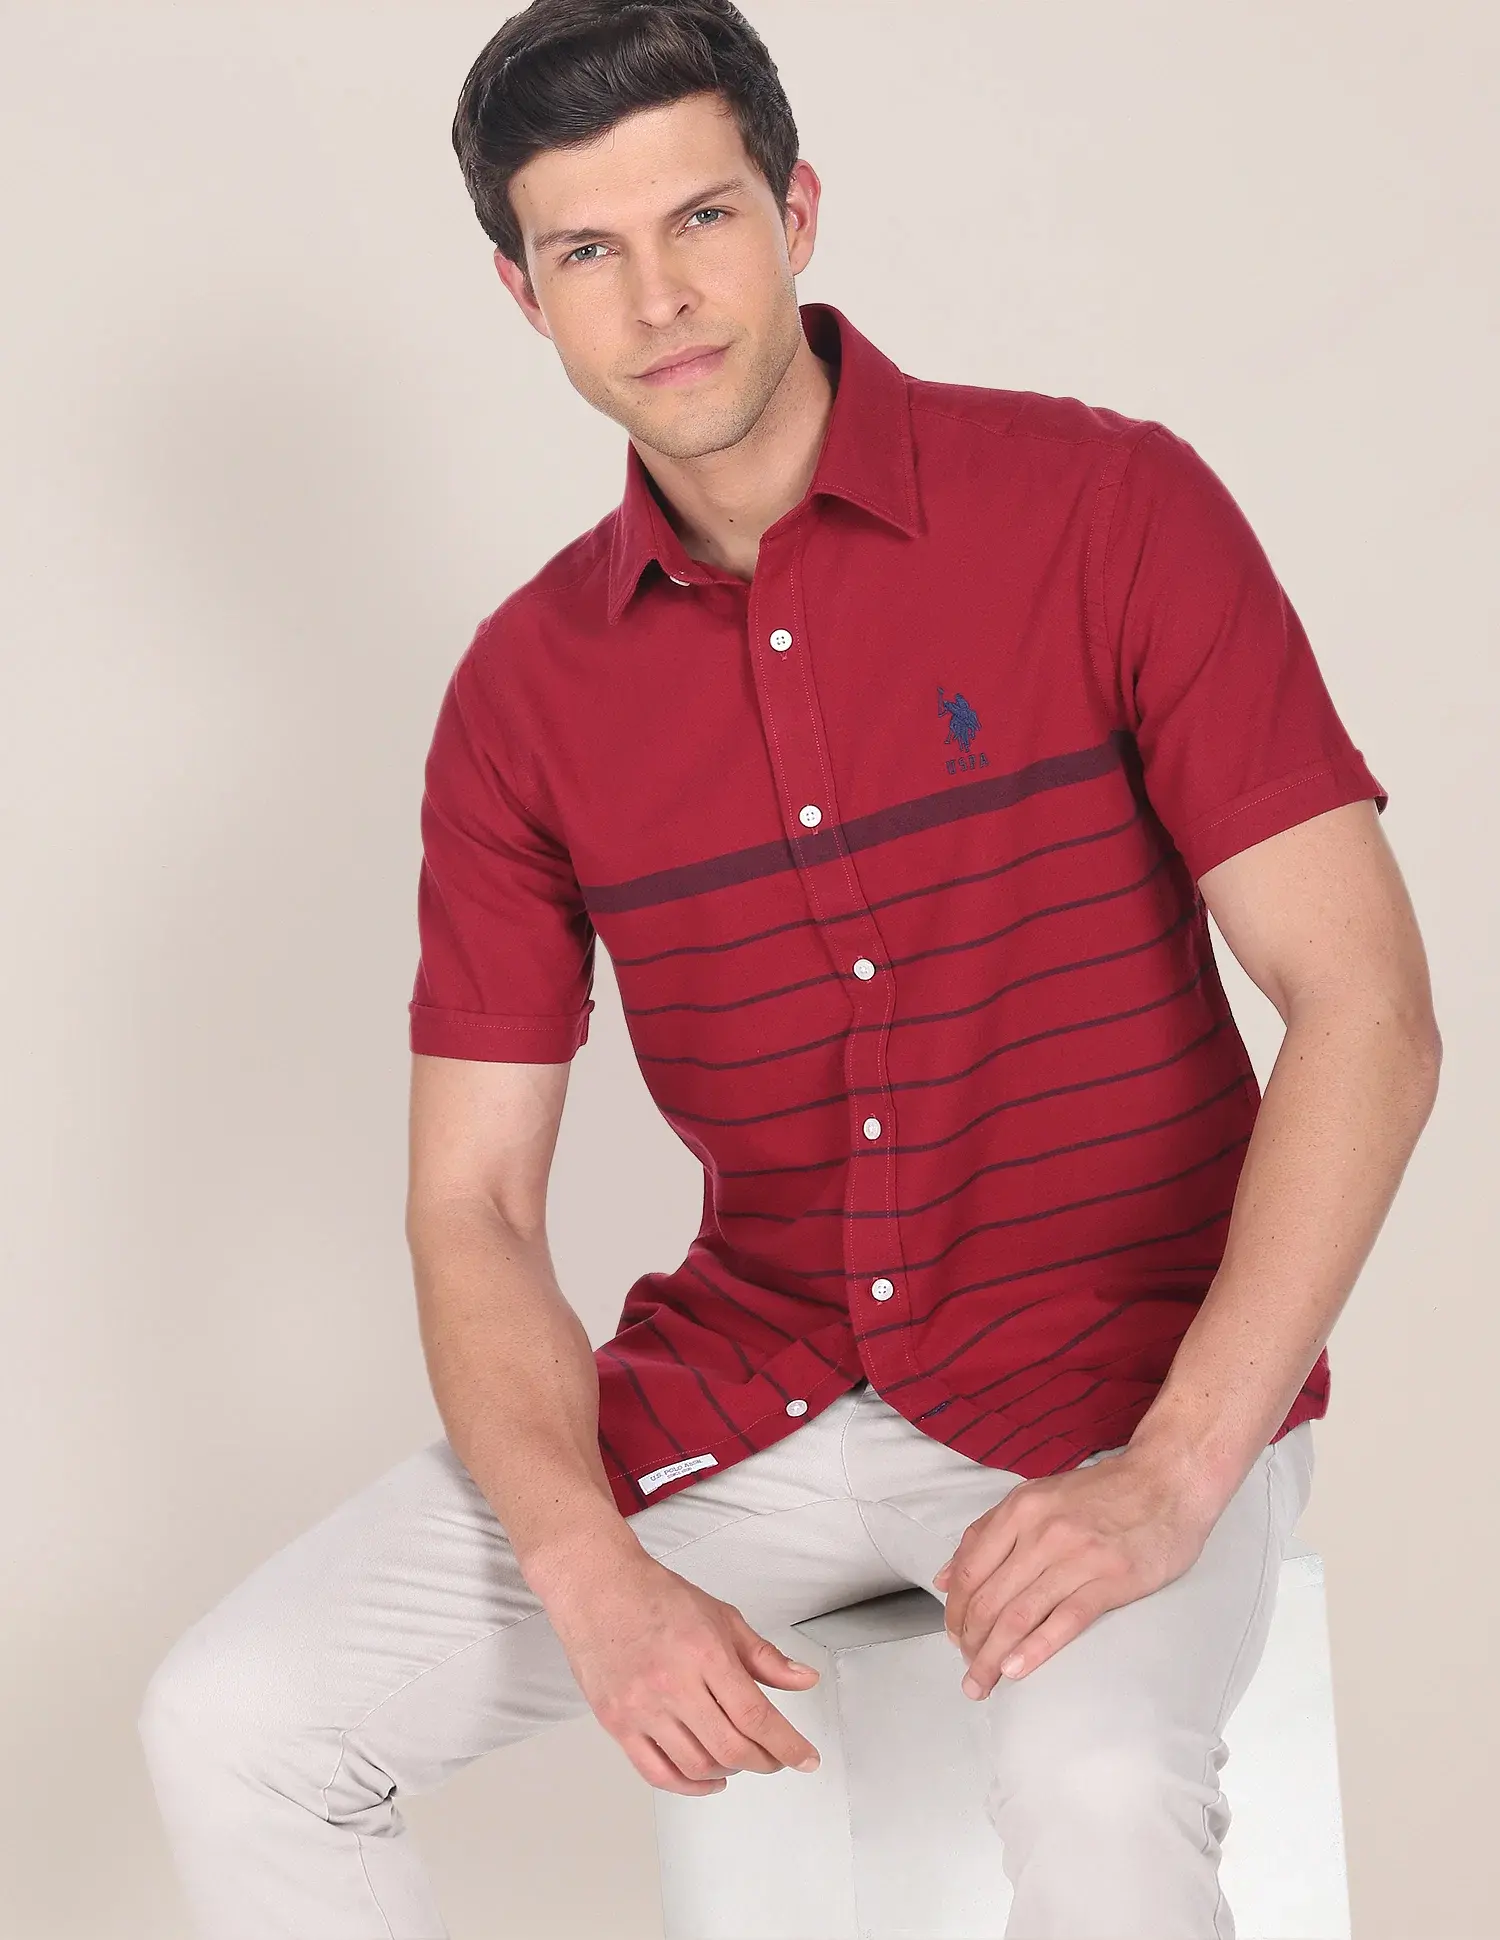 U.S. POLO Signature Engineered Stripe Cotton Shirt